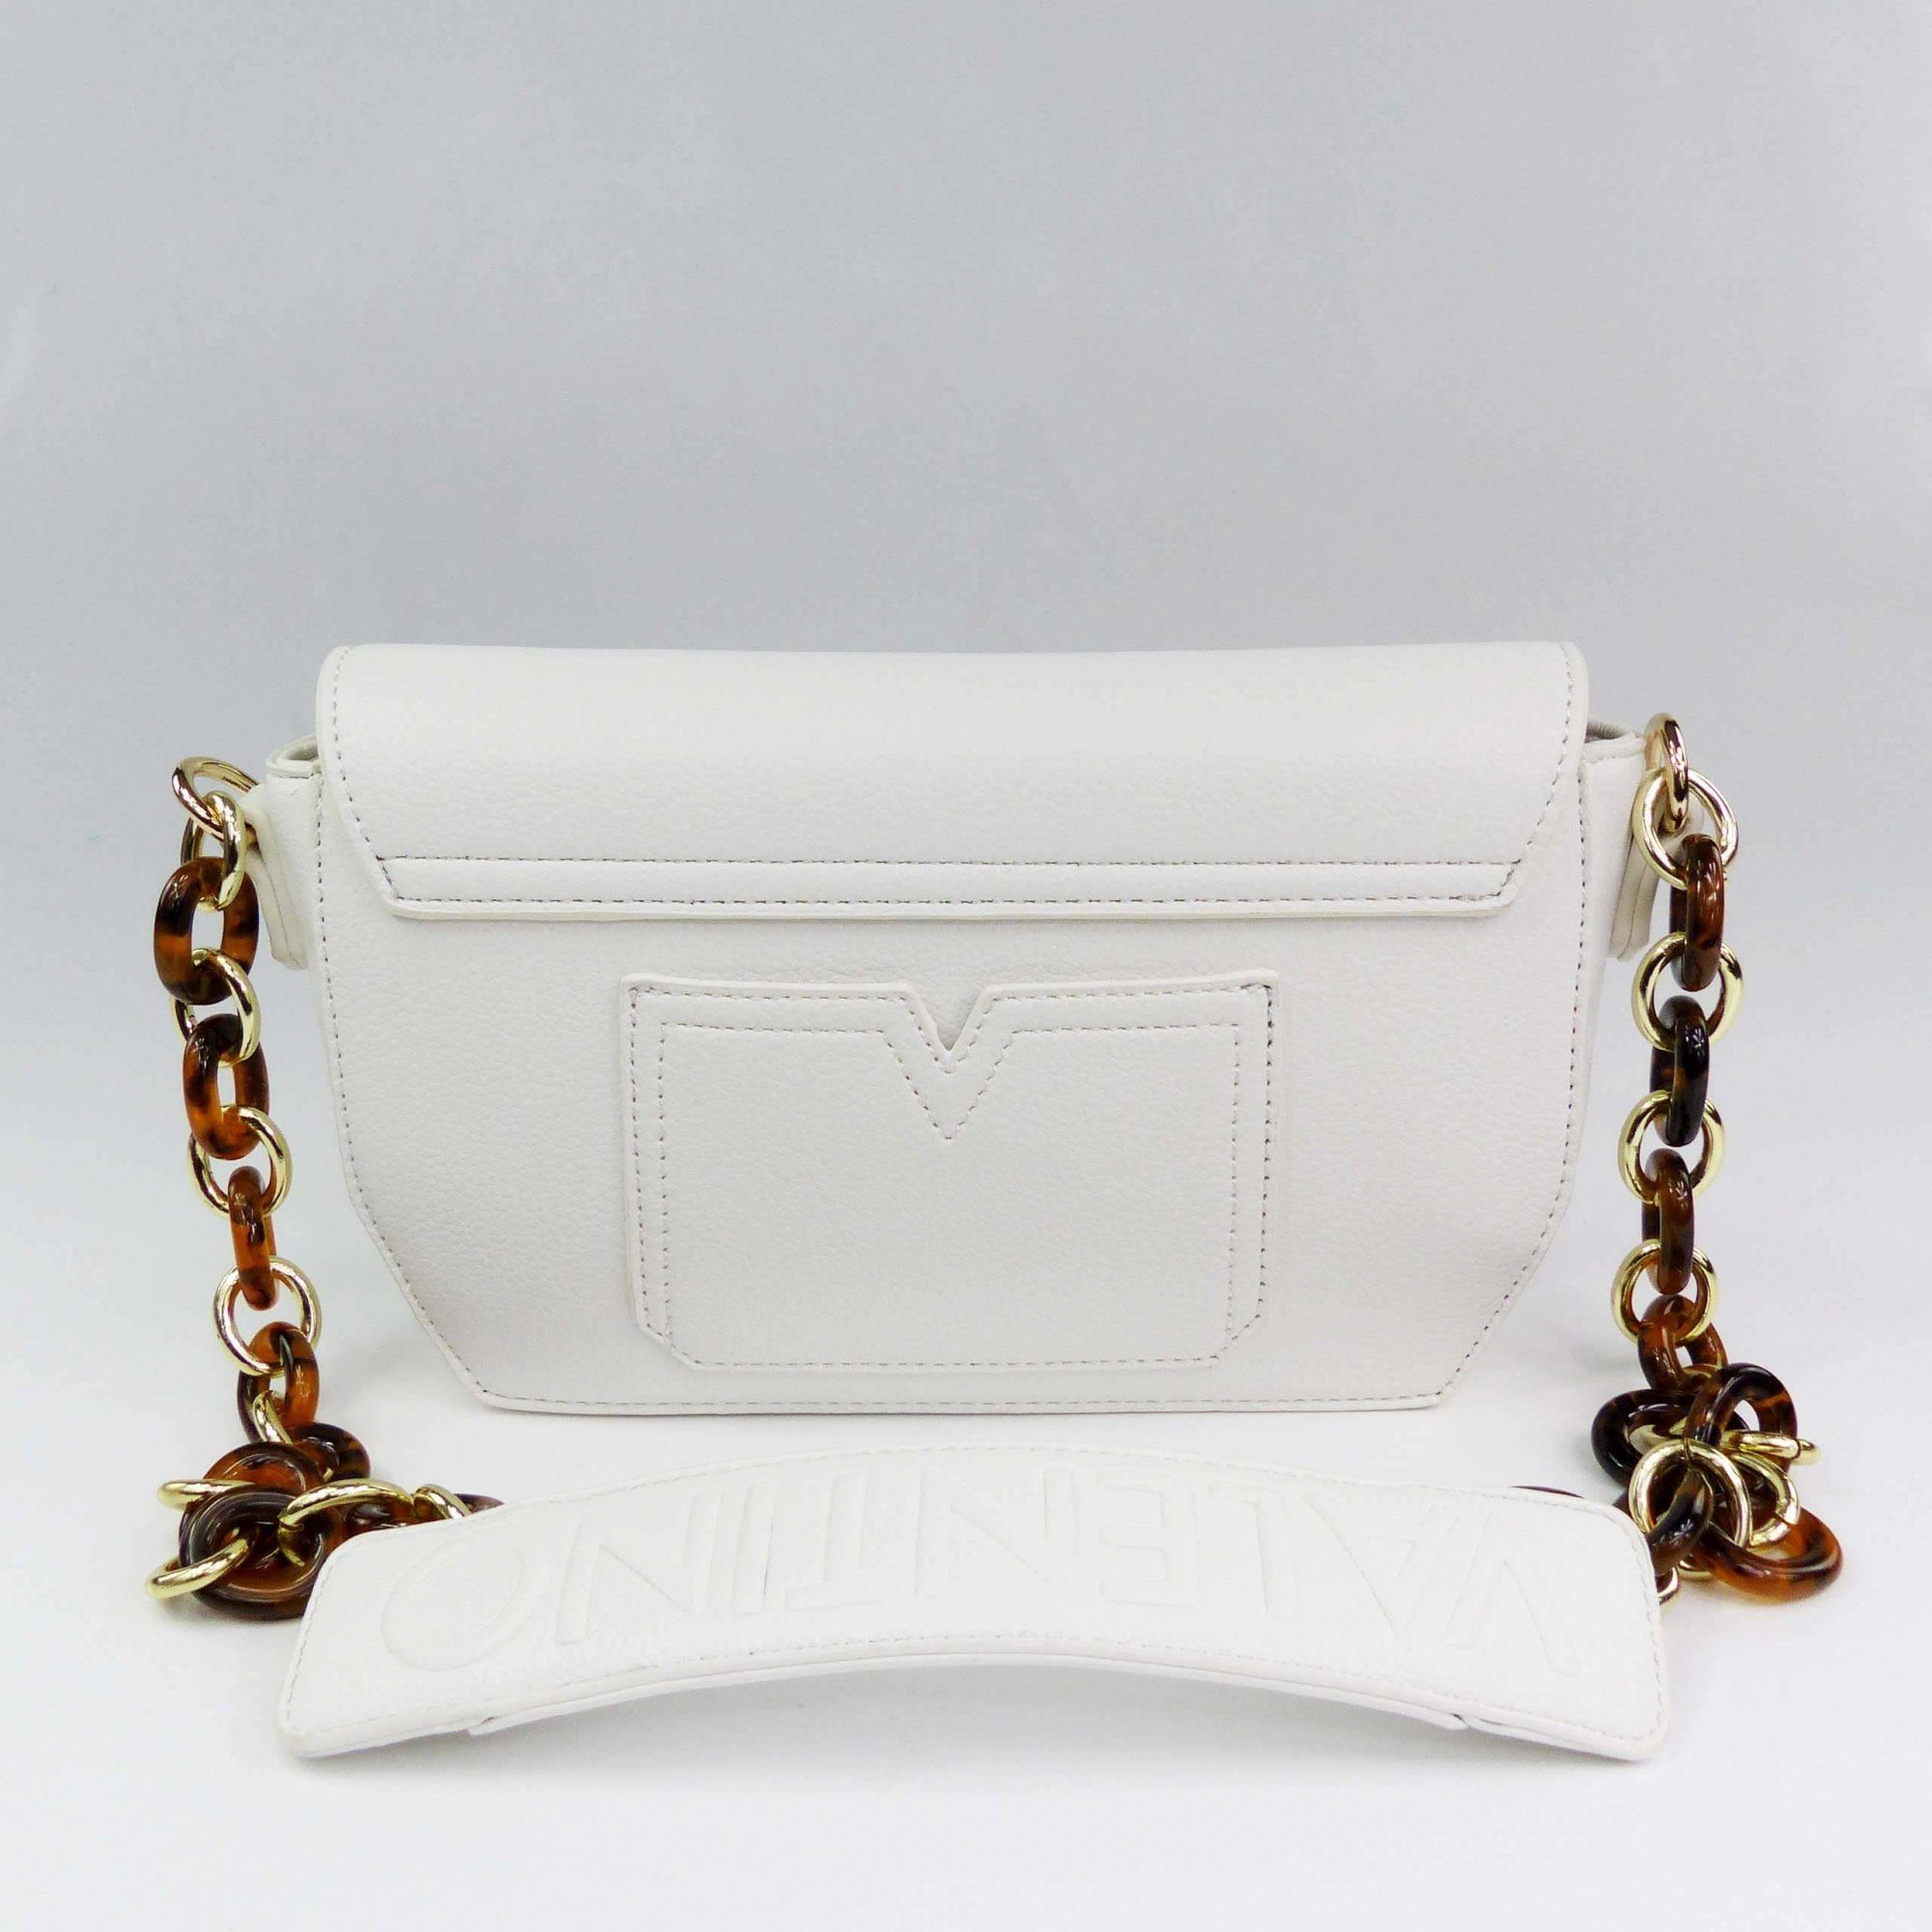 VALENTINO Bianco BAGS Handtasche